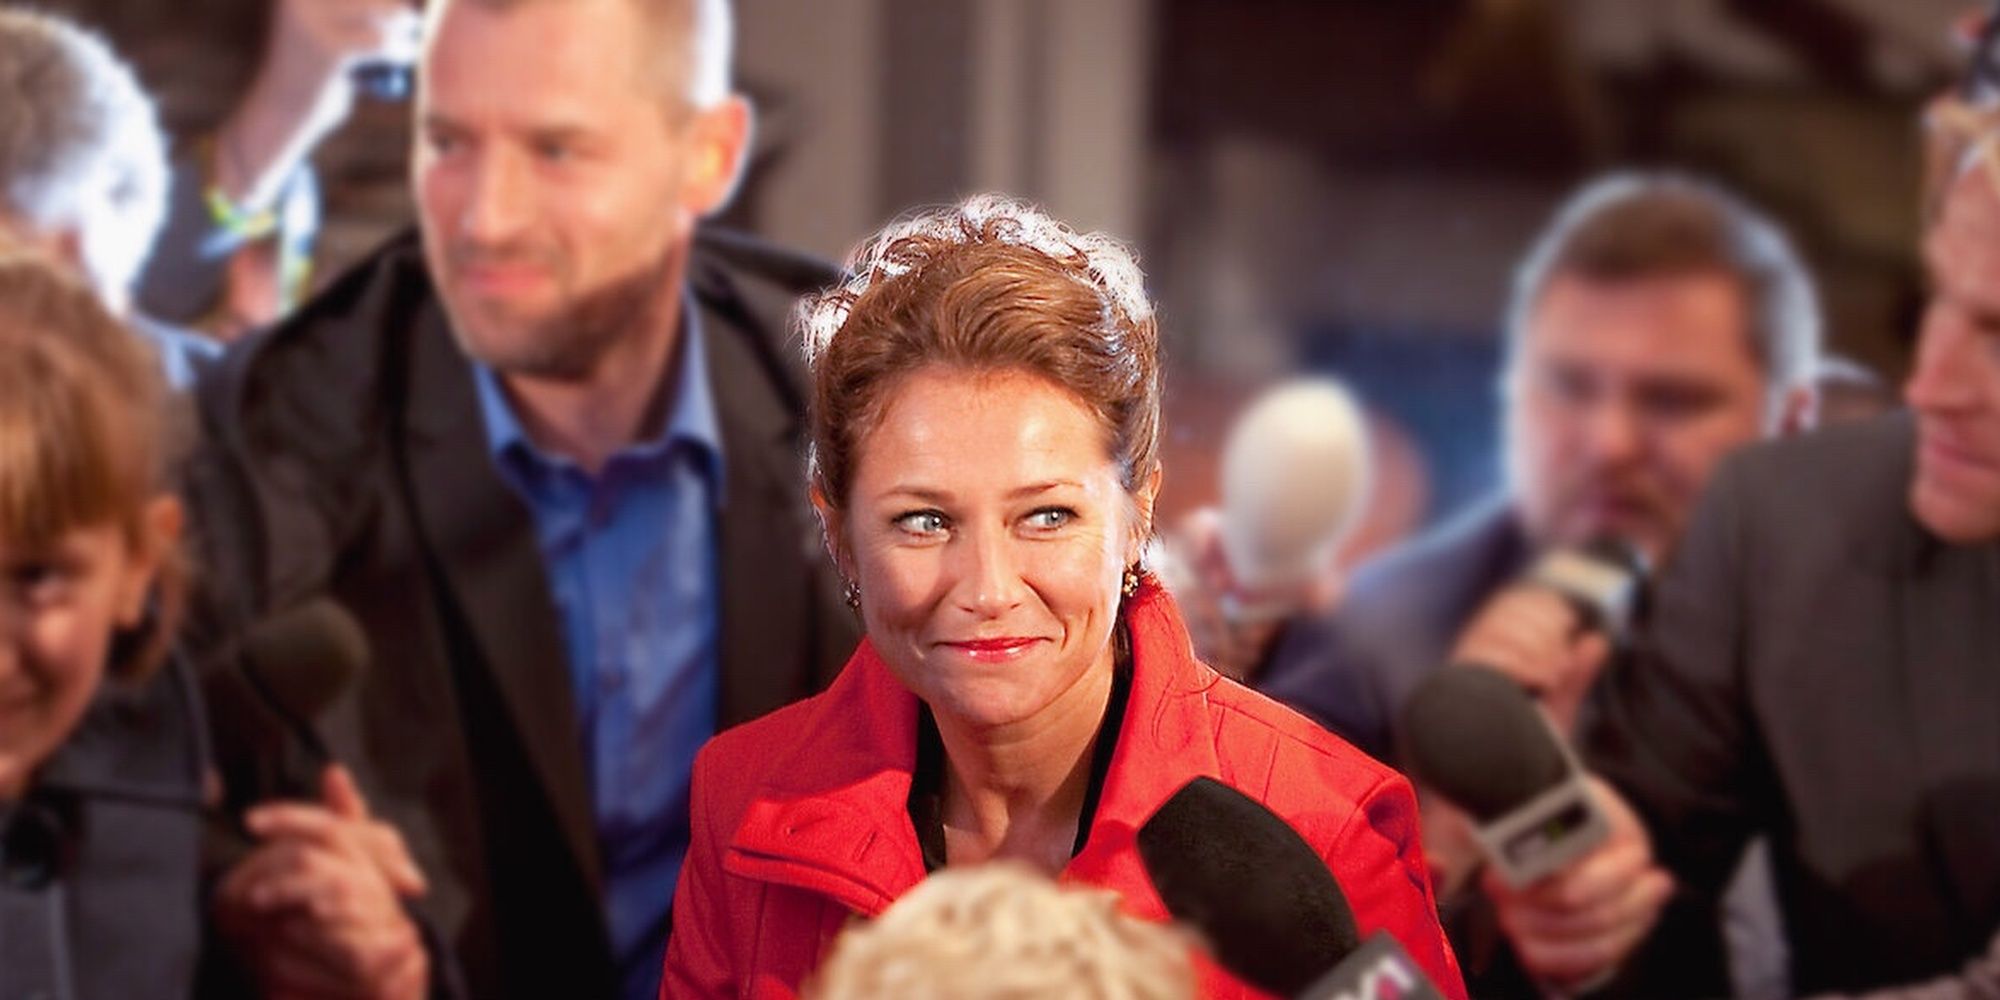 Borgen lead actress Sidse Babett Knudsen